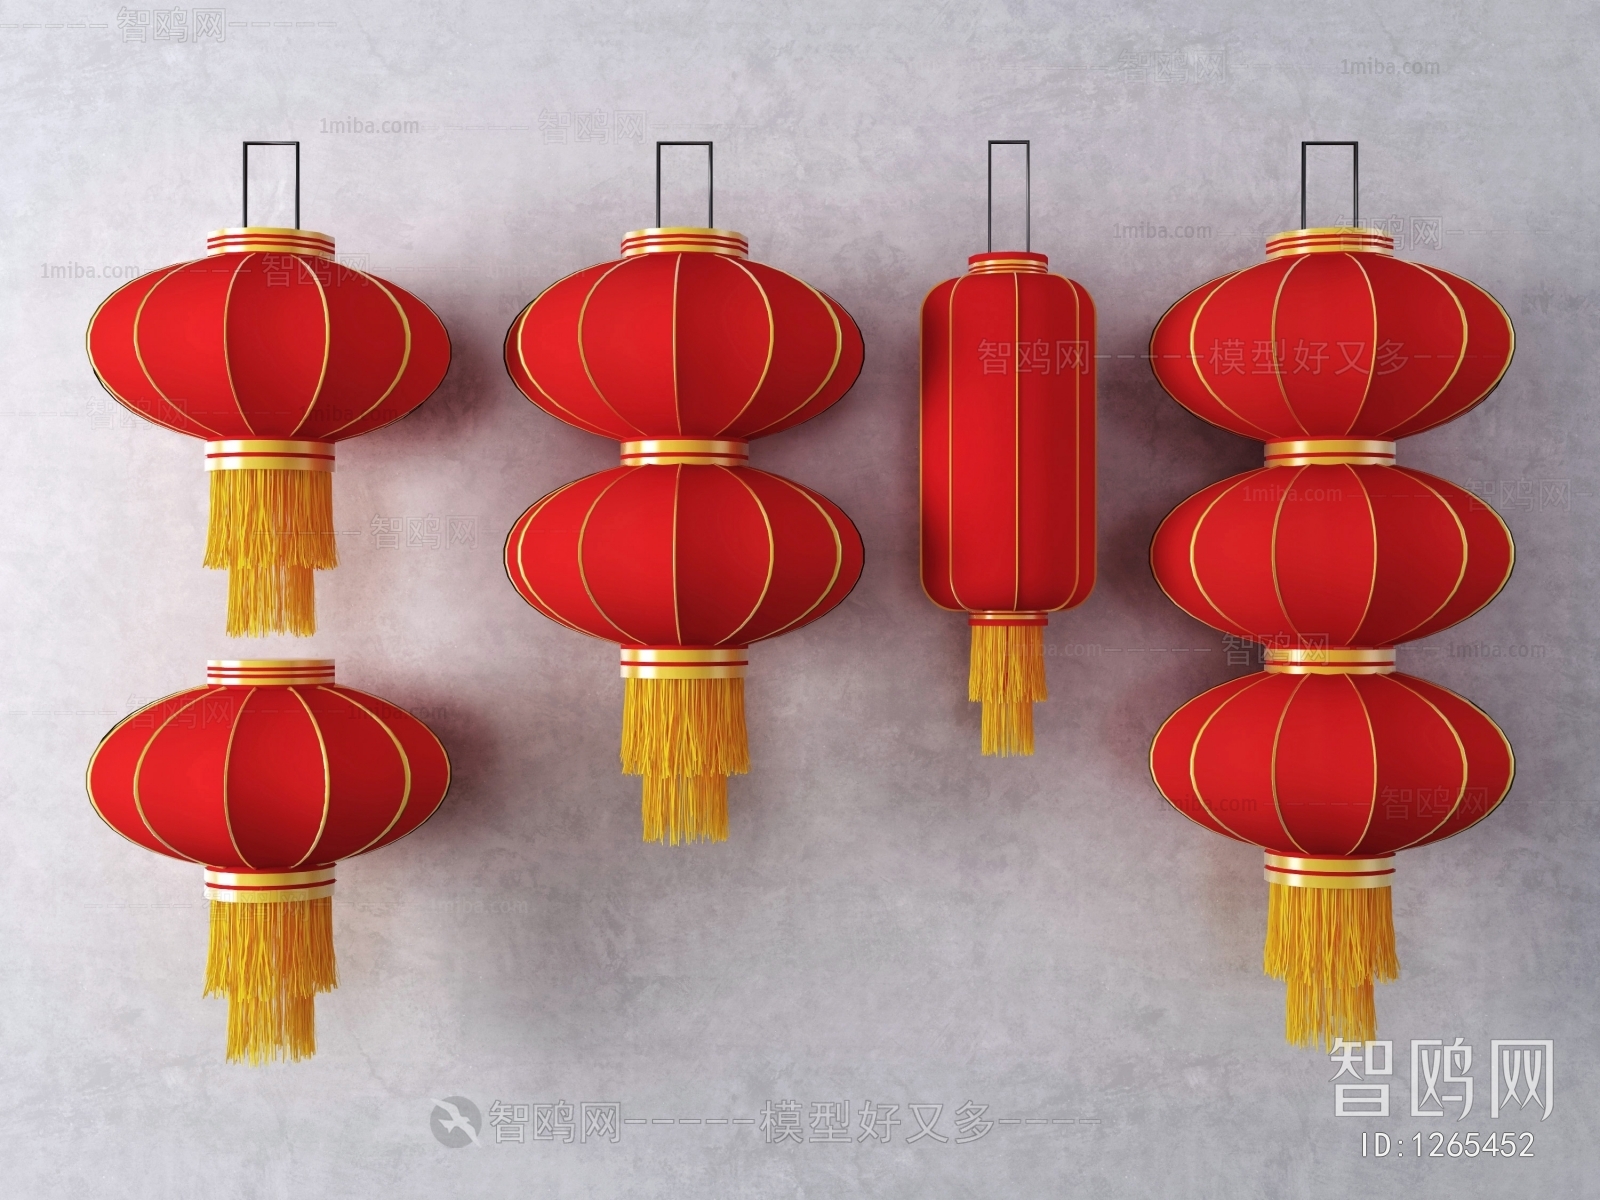 Chinese Style Lantern